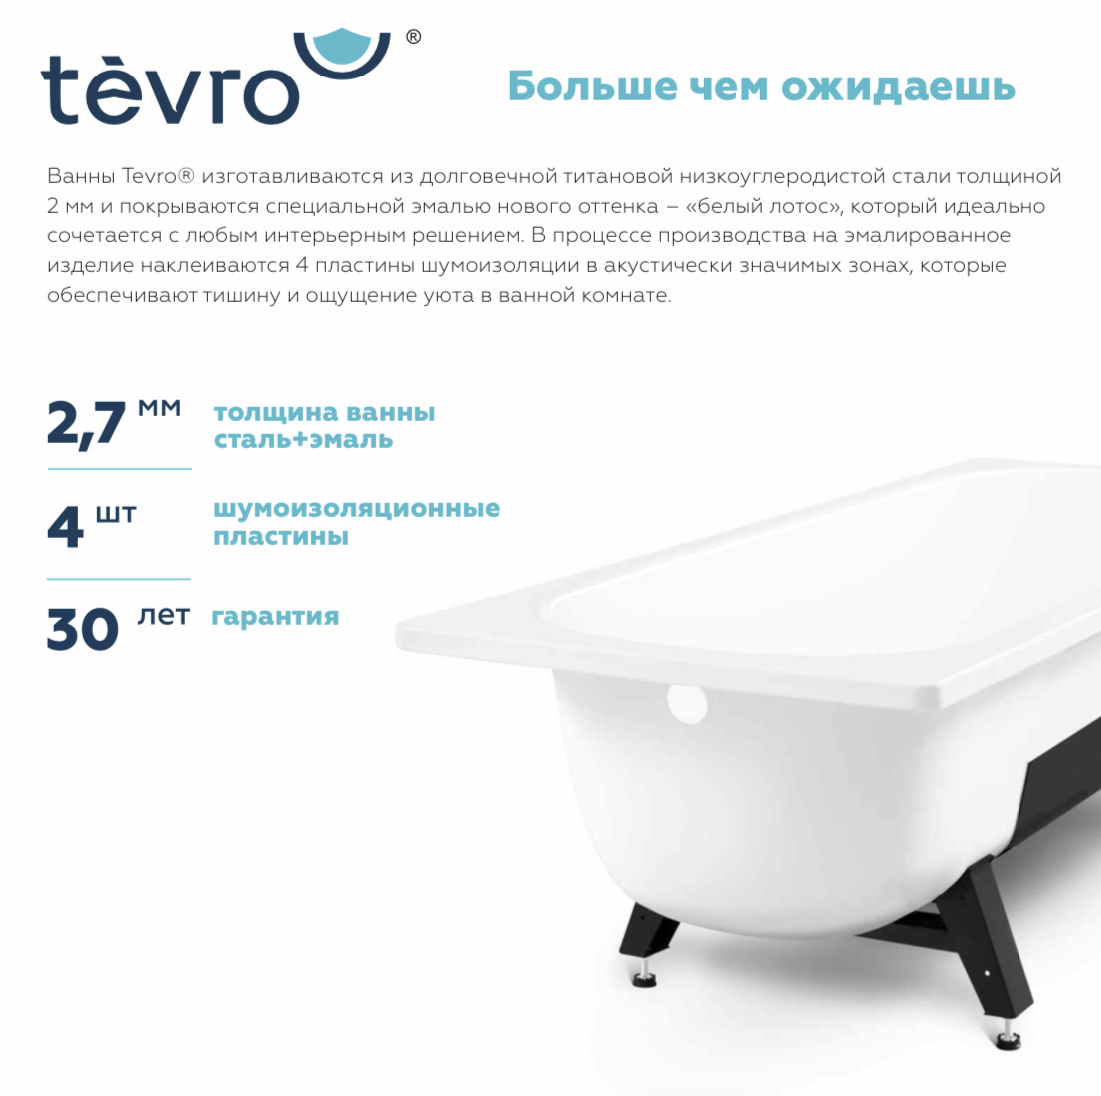 Ванна Tevro сталь 2.7 мм 150х70х40 белый Лотос. Ванна стальная Tevro 150x70x40 с шумоизоляцией и опорной подставкой. Ванна стальная 170*70 Tevro. Ванна Reimar 170x70 сталь. Производитель ванн отзывы